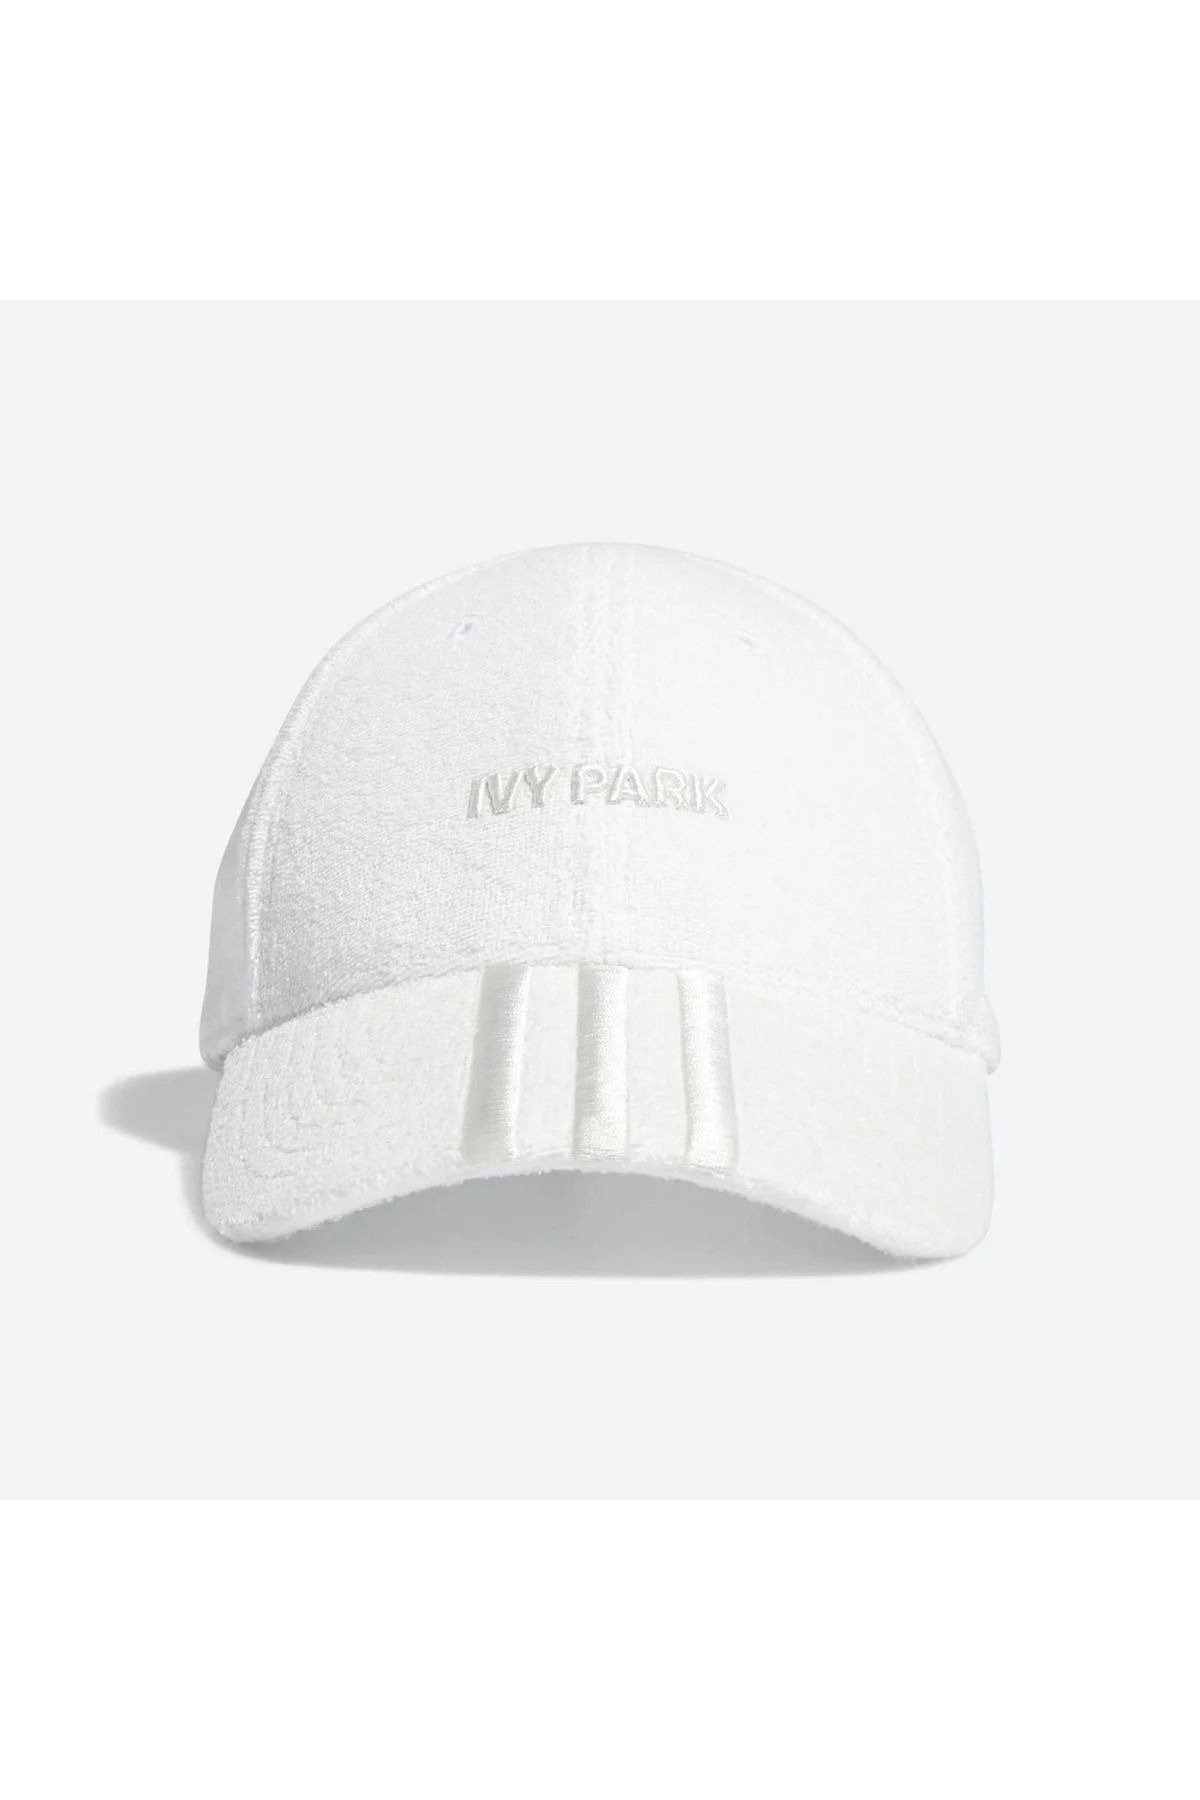 adidas Beyonce IVY Park beyaz unisex spor şapka h59158